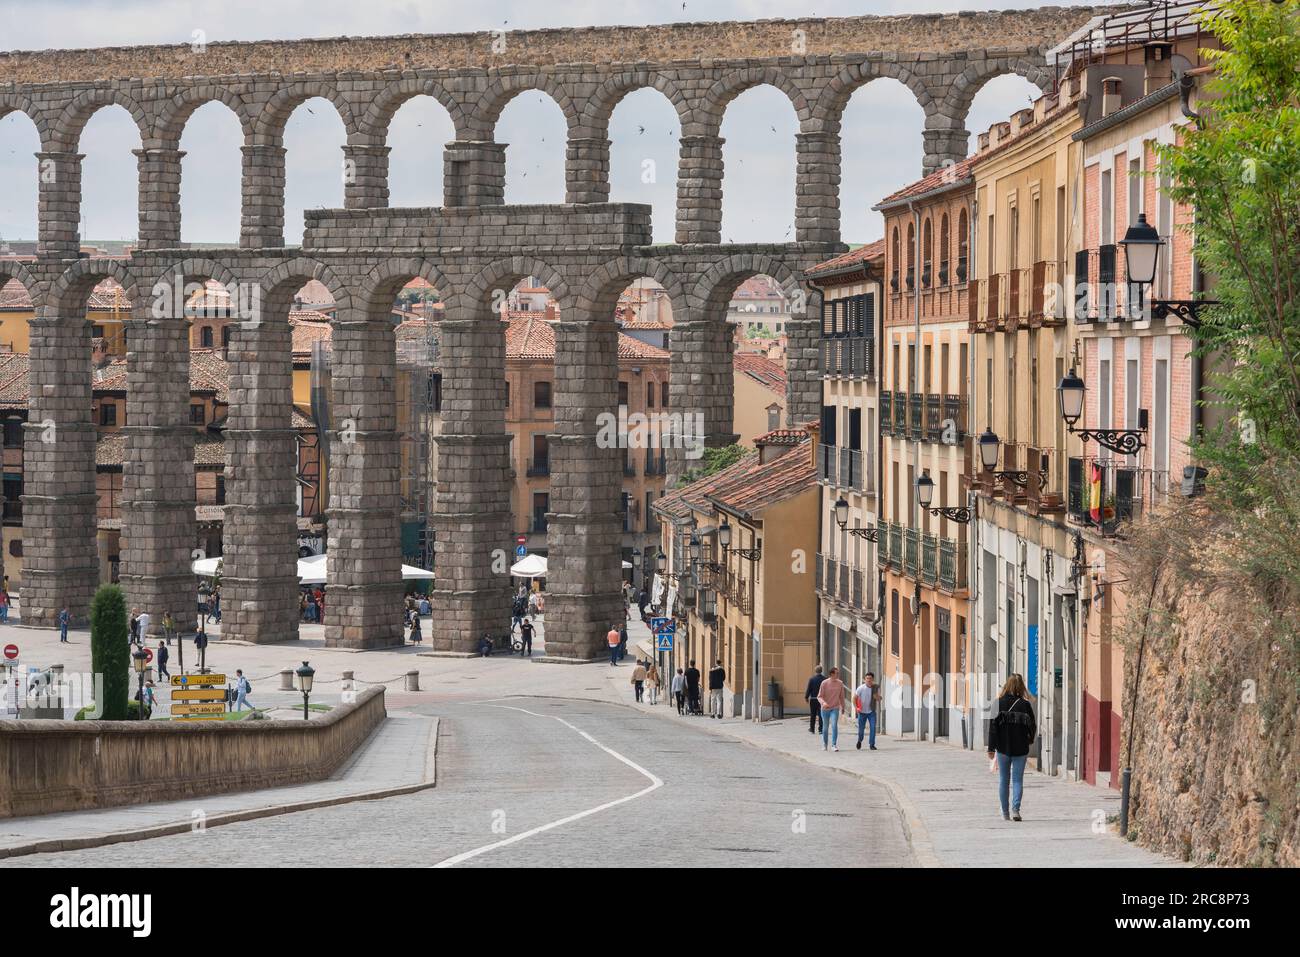 Roman architecture Segovia, view along Calle San Juan towards the 1st Century Roman aqueduct spanning the historic city of Segovia, central Spain Stock Photo